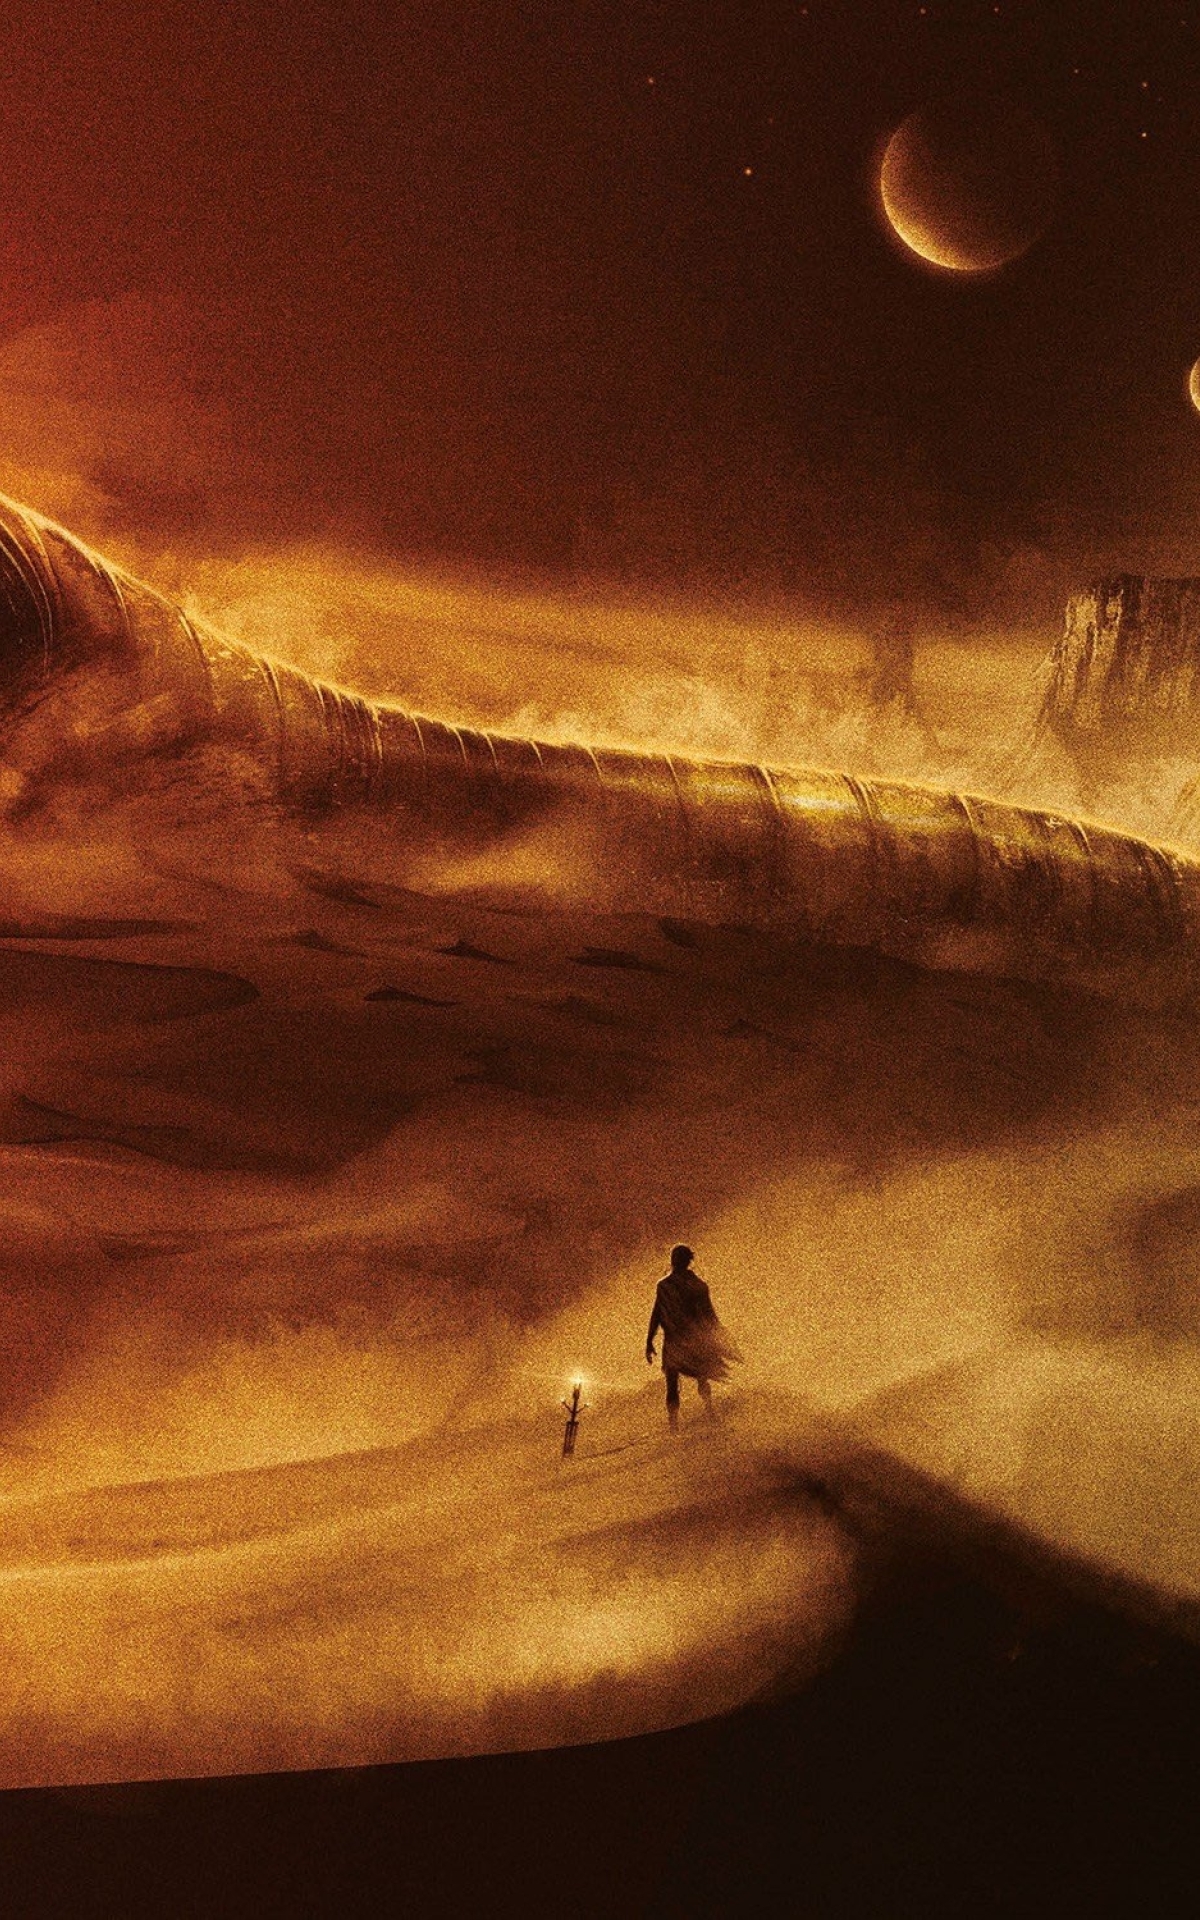 Dune II for mac download free